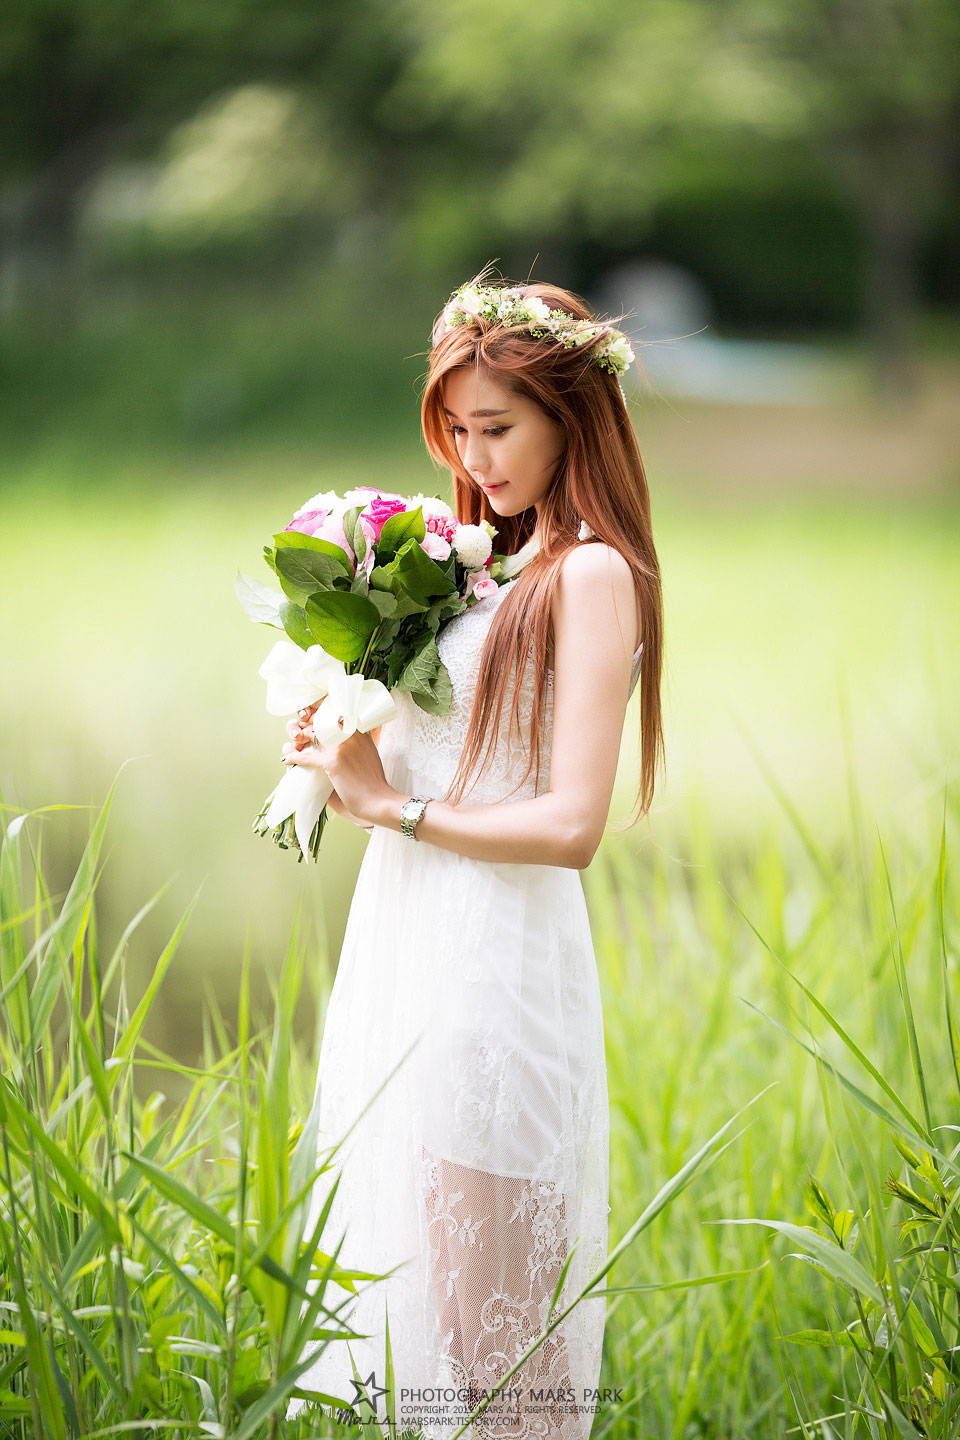 Korean model Kim Ha Yul wedding dress